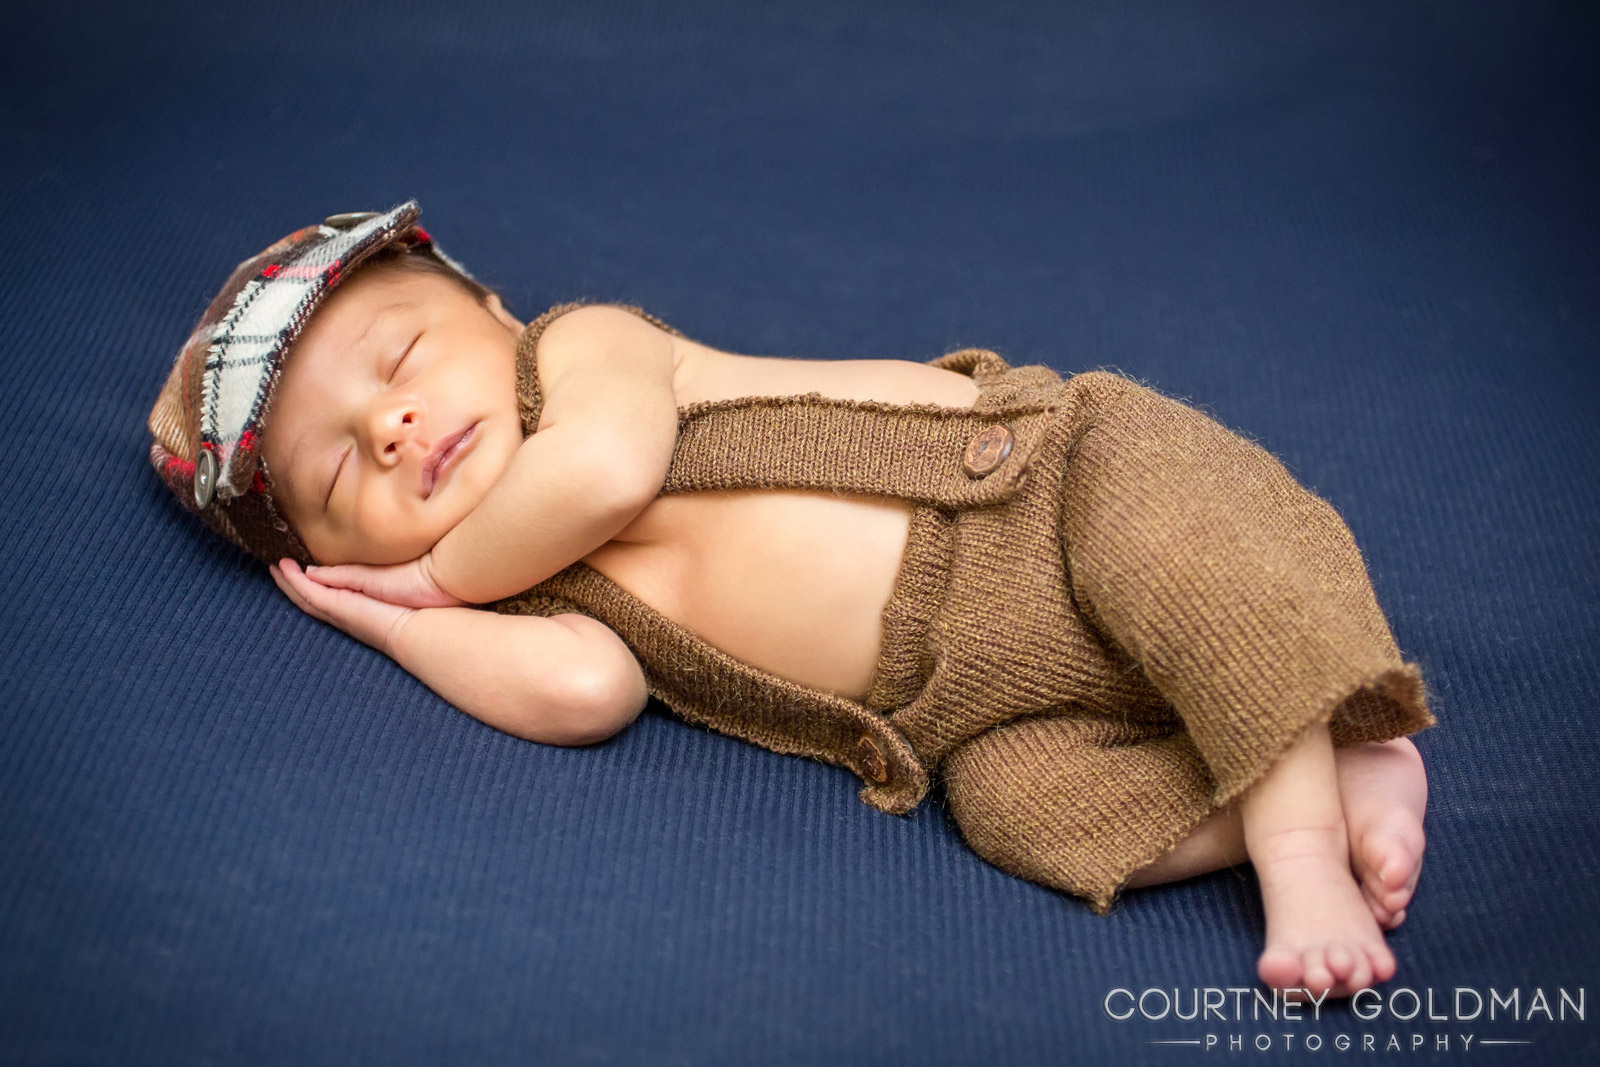 Atlanta Maternity and Newborn Photography by Courtney Goldman 16.jpg